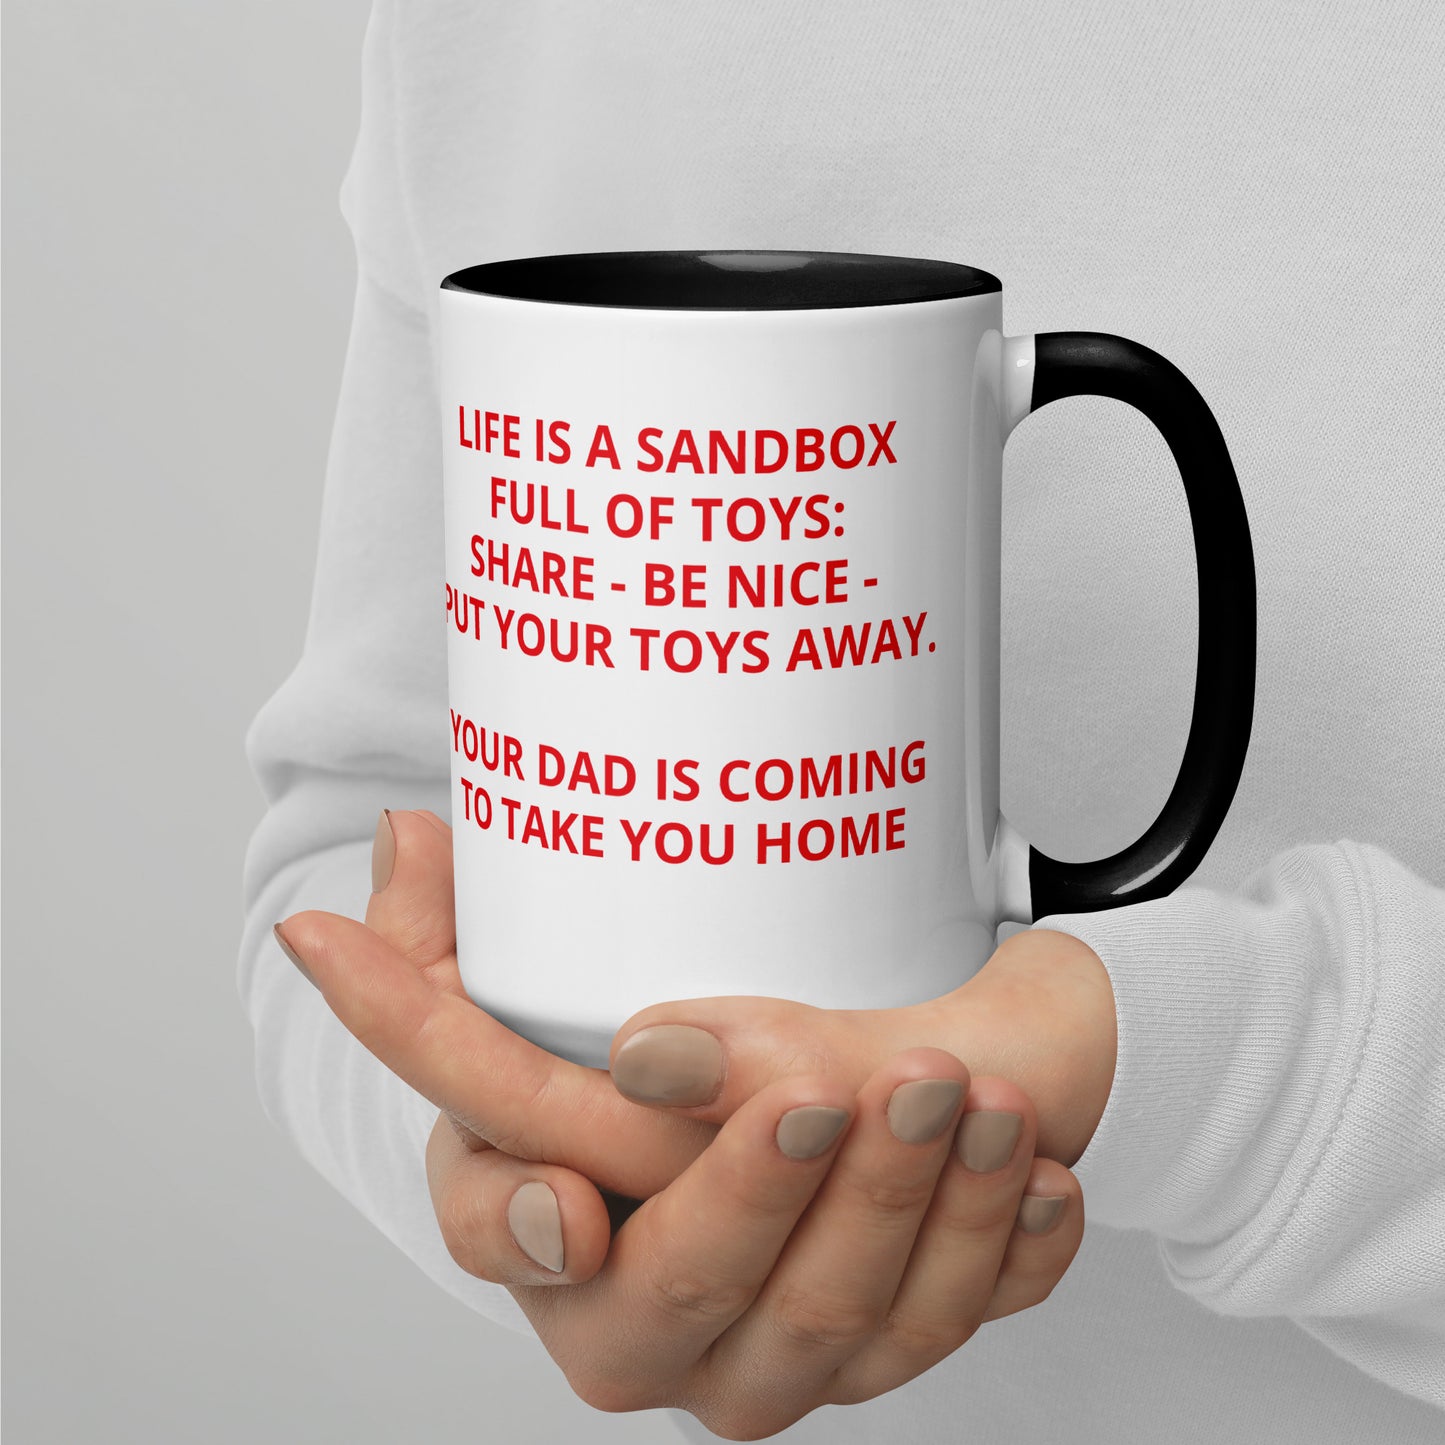 SANDBOX BULLY Mug with Color Inside